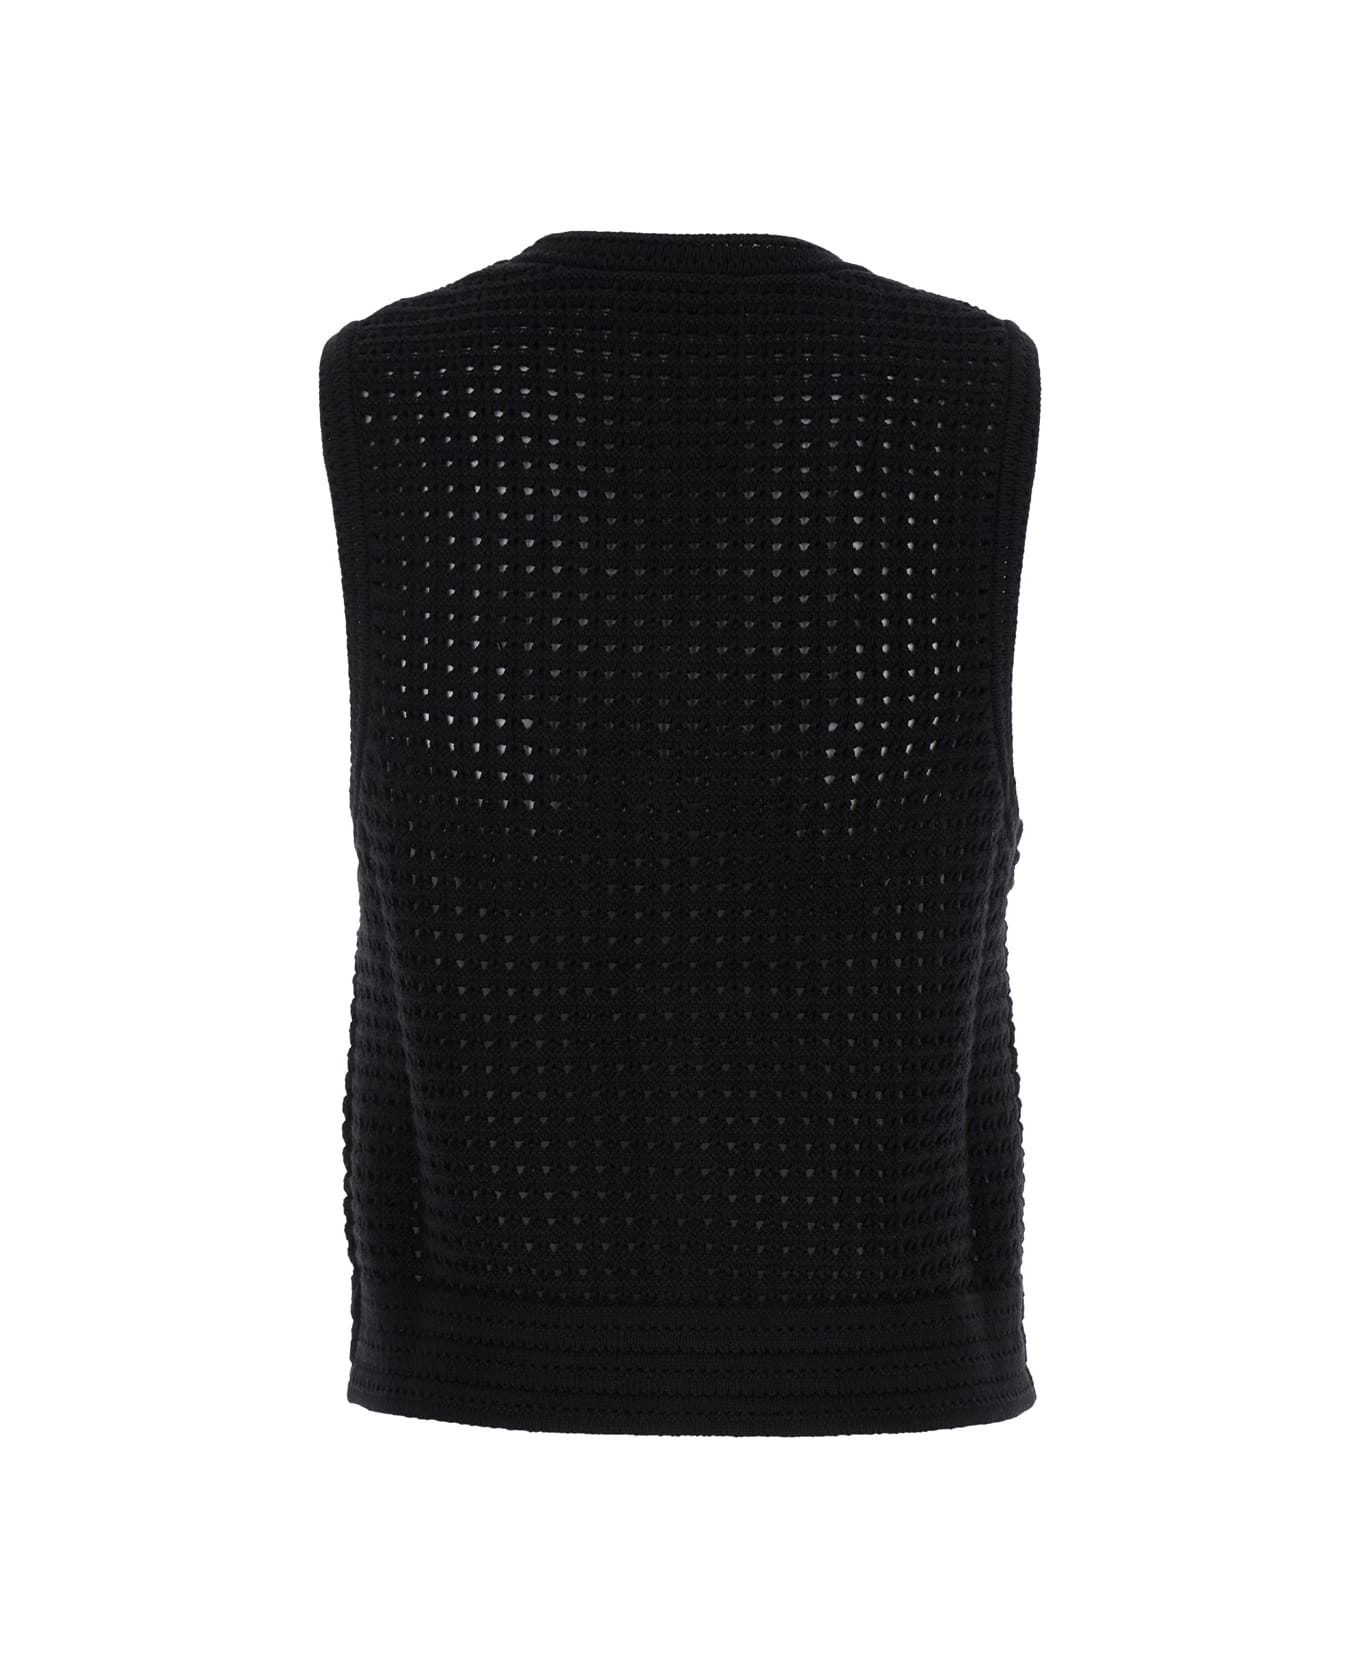 Dunst Black Knit Vest With Buttons In Cotton Woman - Black